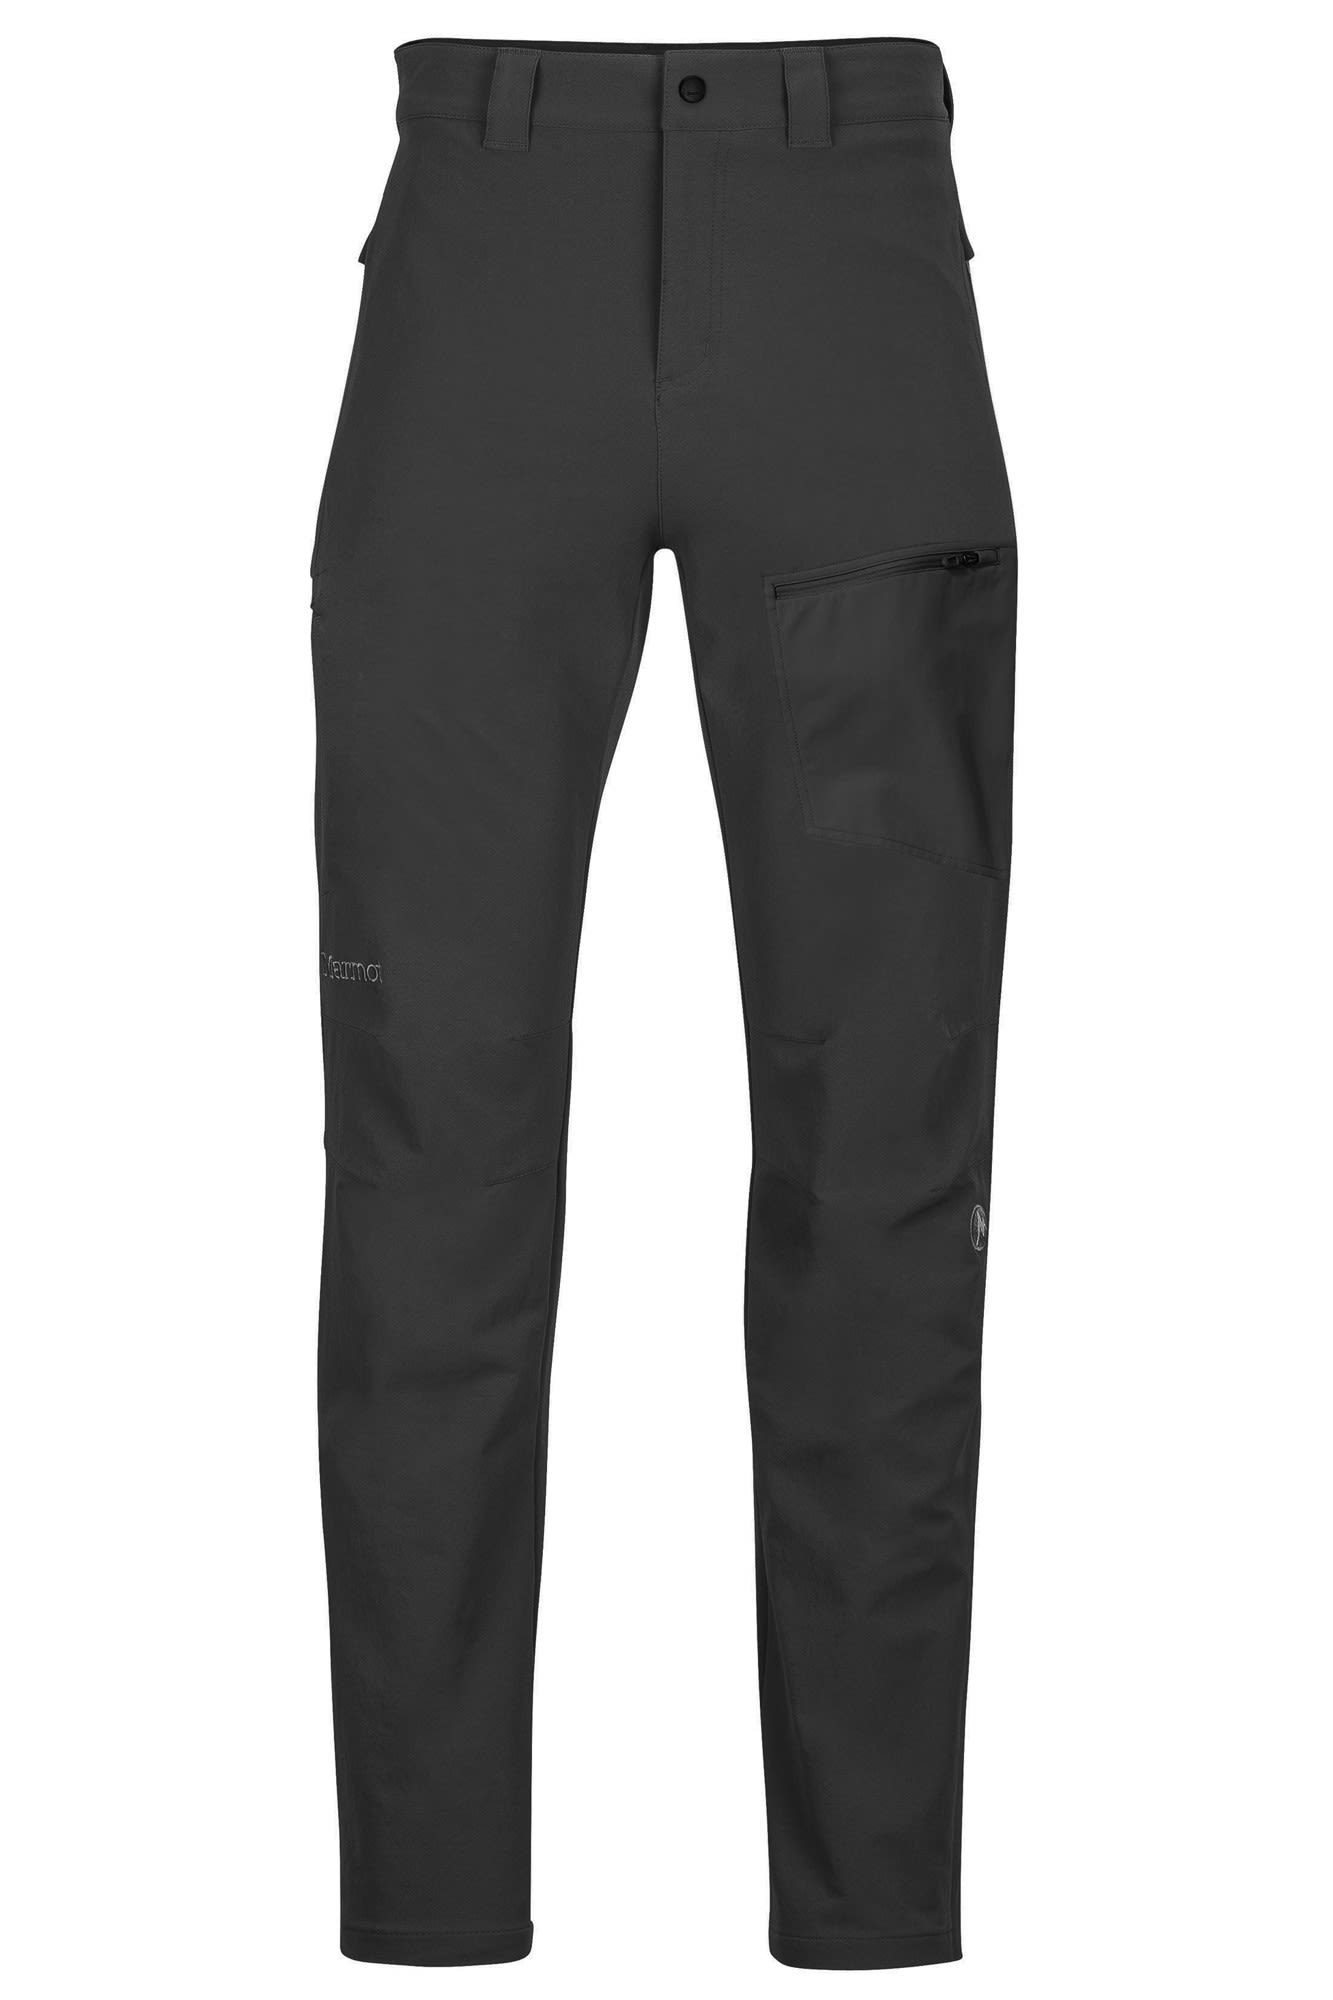 Marmot Scree Pant Schwarz- Male Jogginghosen- Grsse 34 - Short - Farbe Black